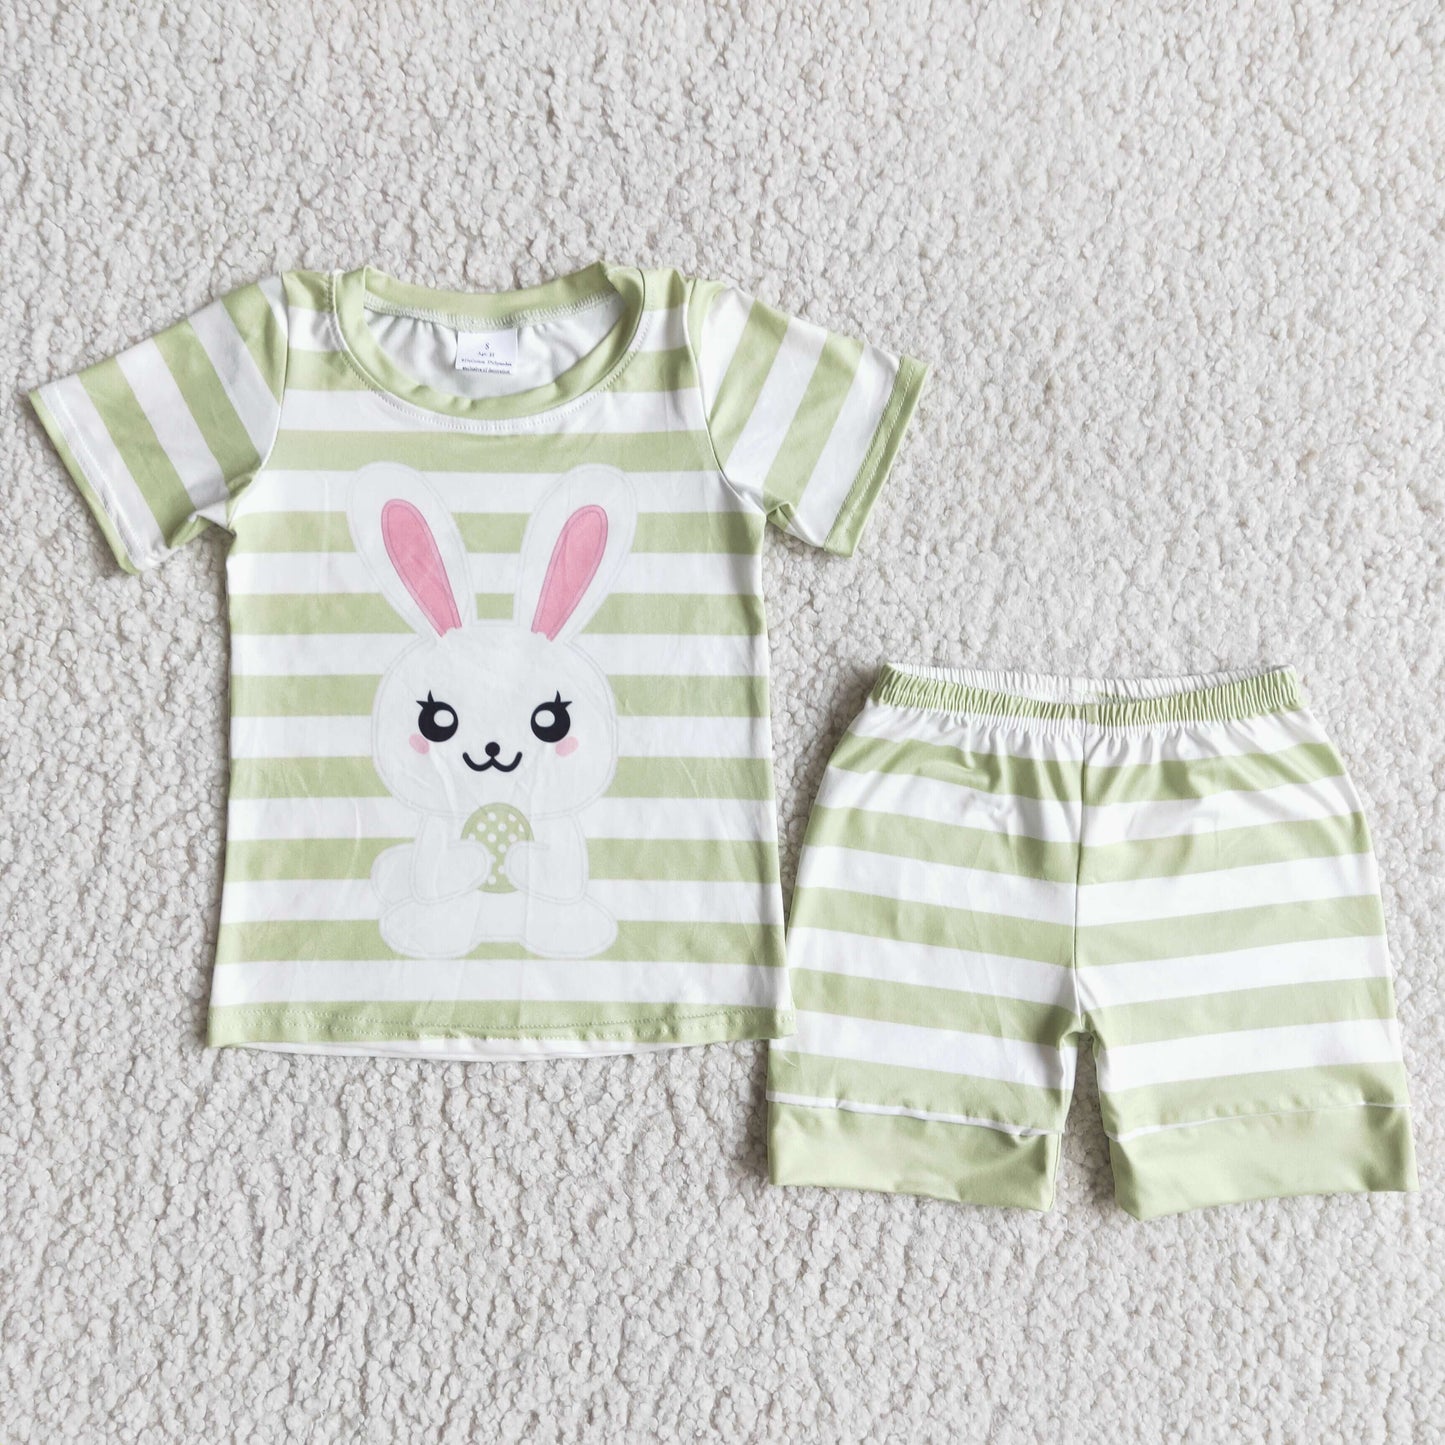 Green stripe bunny print shirt shorts boy easter pajamas